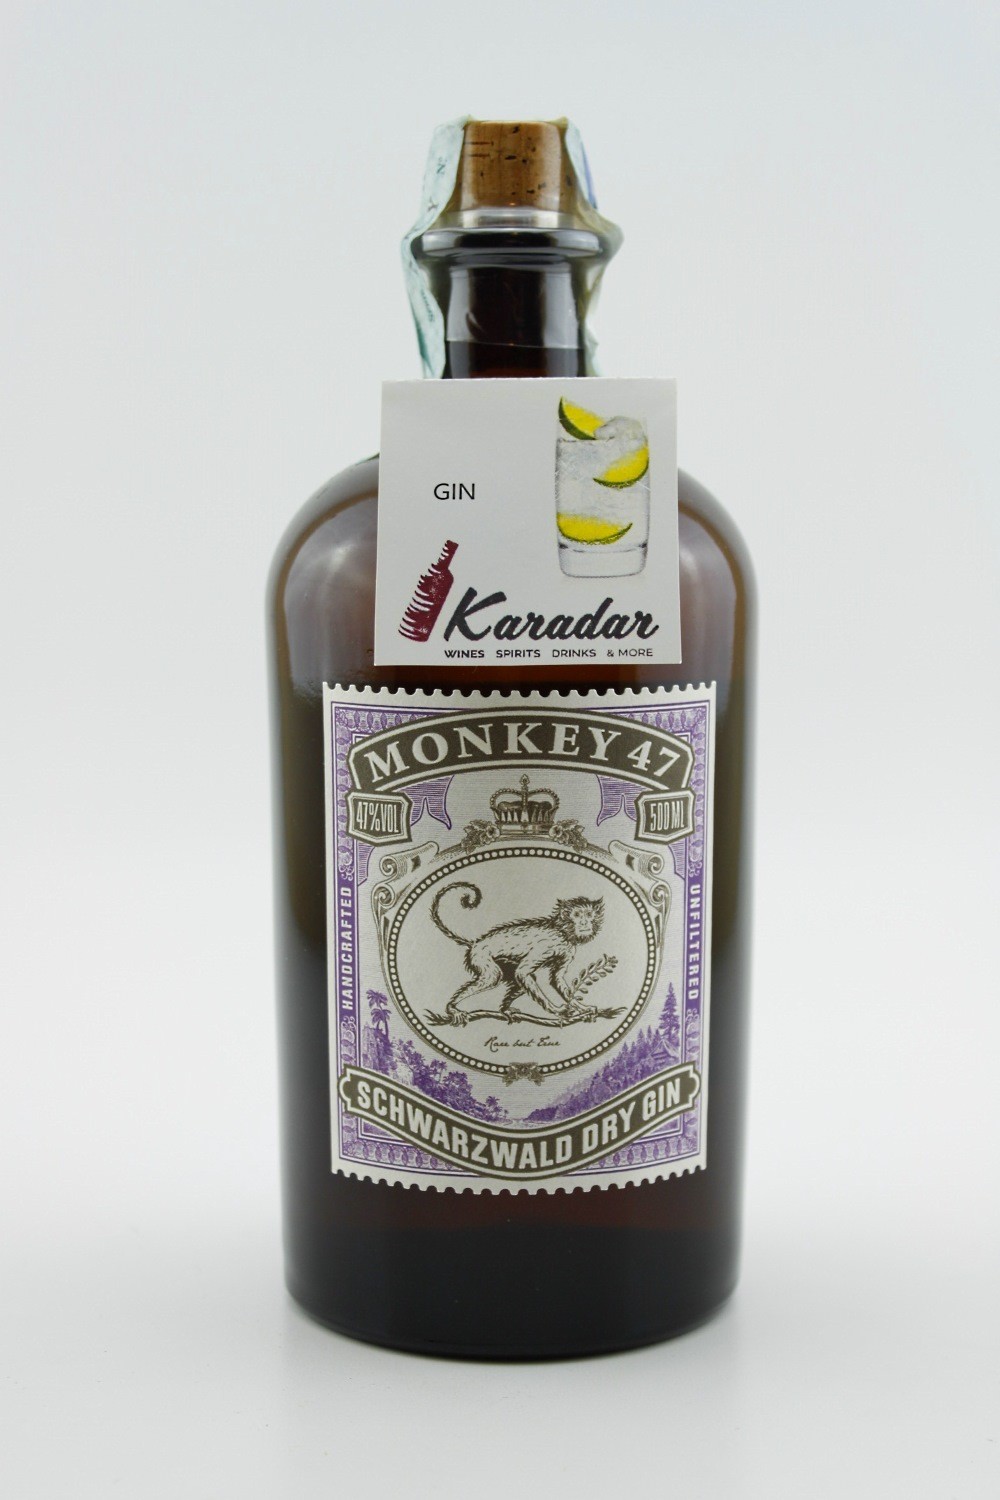  Vendita vini - Monkey 47 Schwarzwald Dry gin 47% vol. 50cl